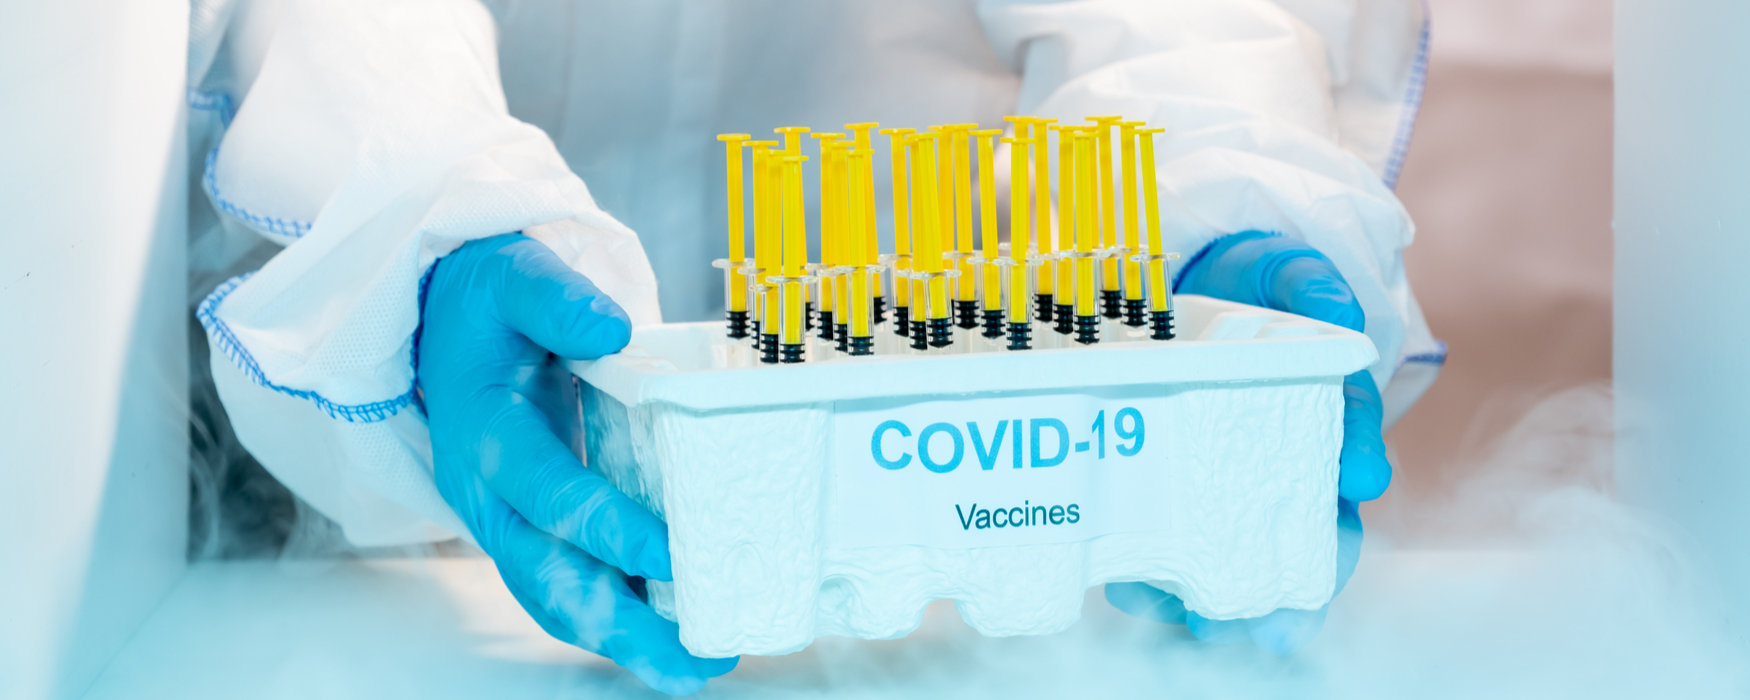 Oregon covid vaccine freezers - covid 19 vaccine freezer - vaccine storage in Oregon